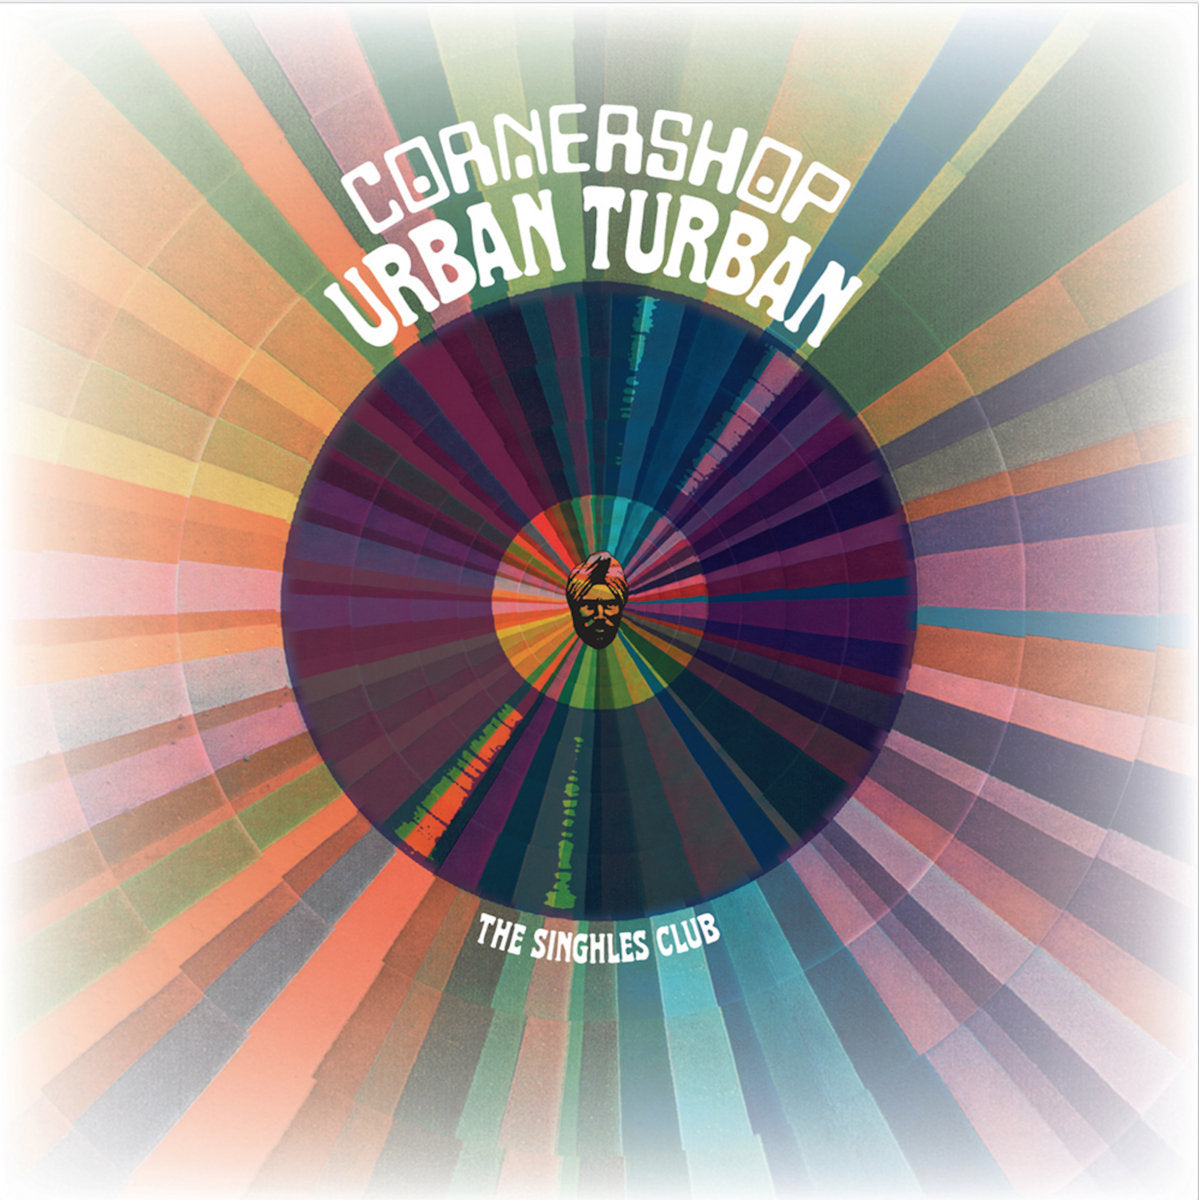 Arcade Sound - Cornershop - The Urban Turban - LP front cover